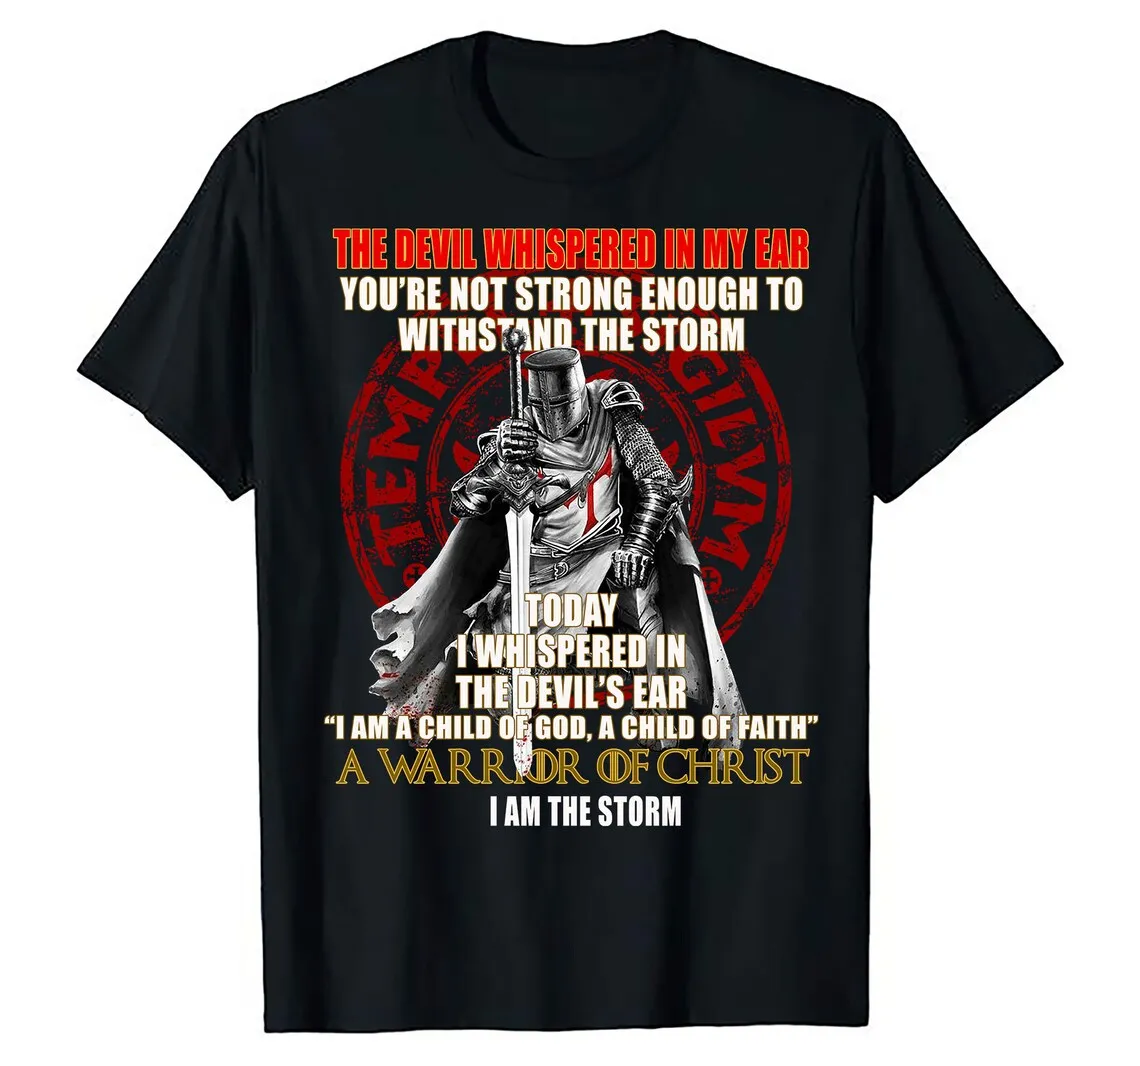 

Knights Templar Christian Warrior I Am The Storm T-Shirt 100% Cotton O-Neck Summer Short Sleeve Casual Mens T-shirt Size S-3XL